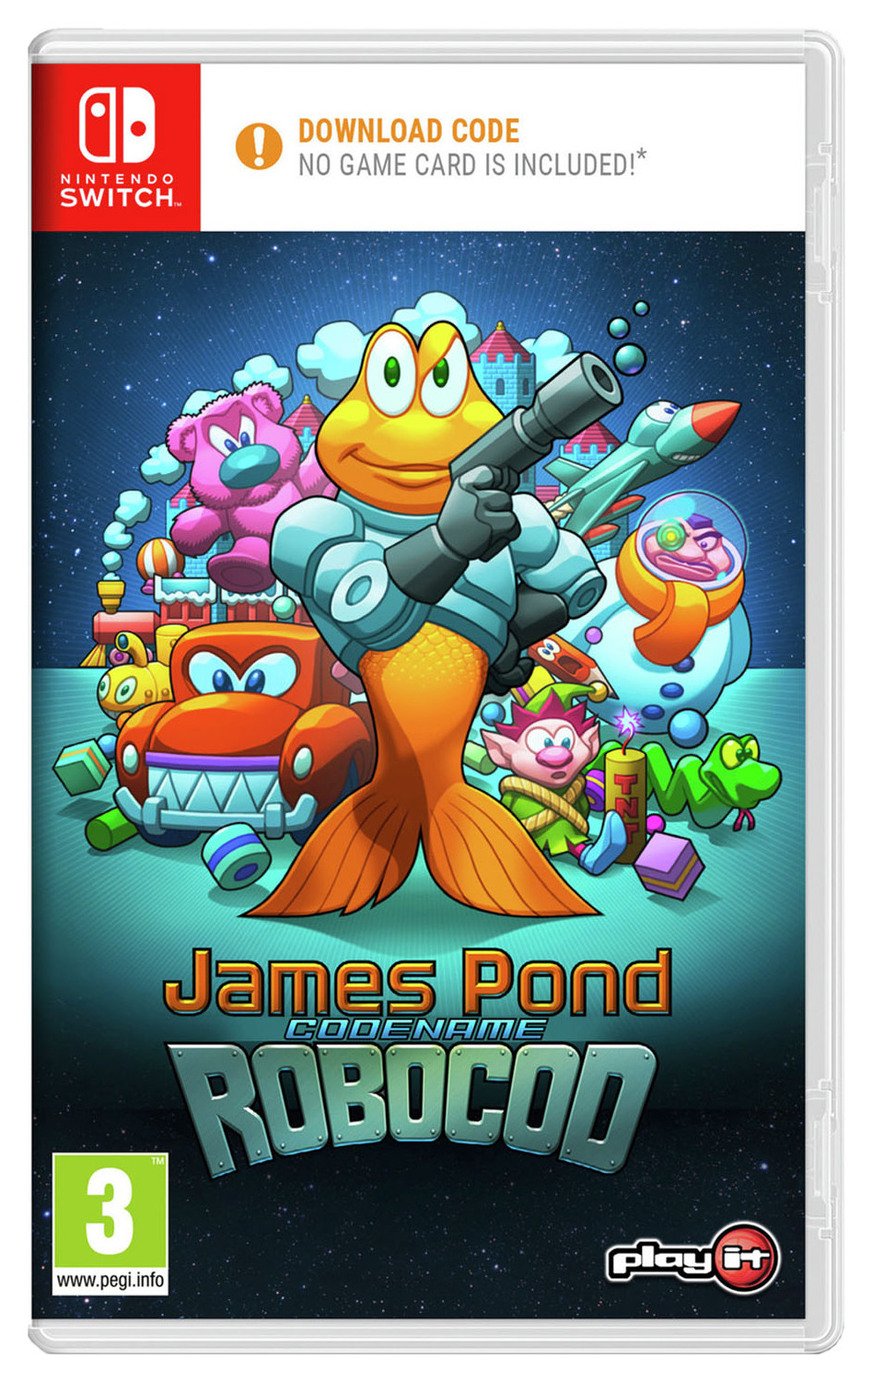 James Pond: Codename Robocod Nintendo Switch Game